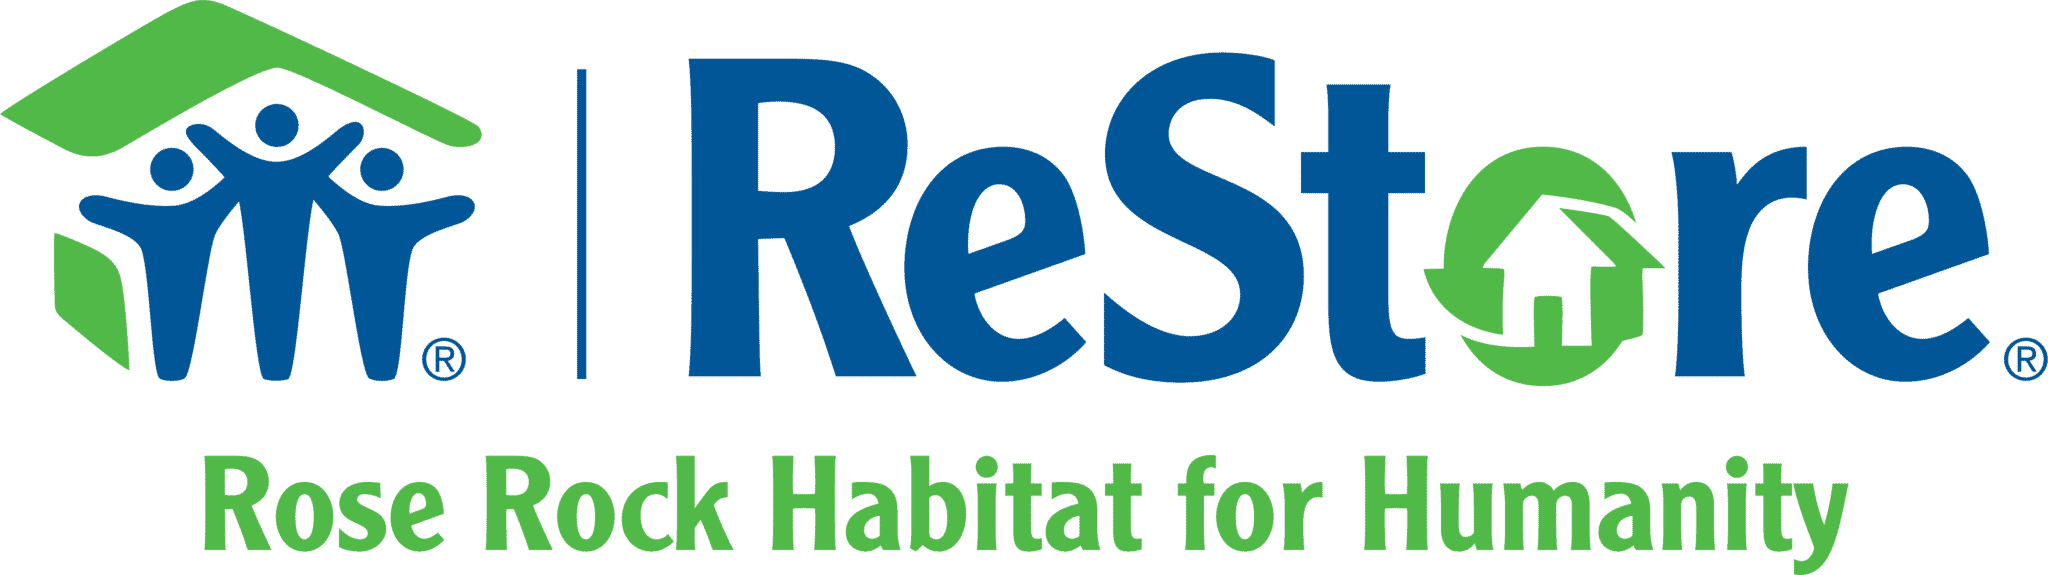 habitat restore logo